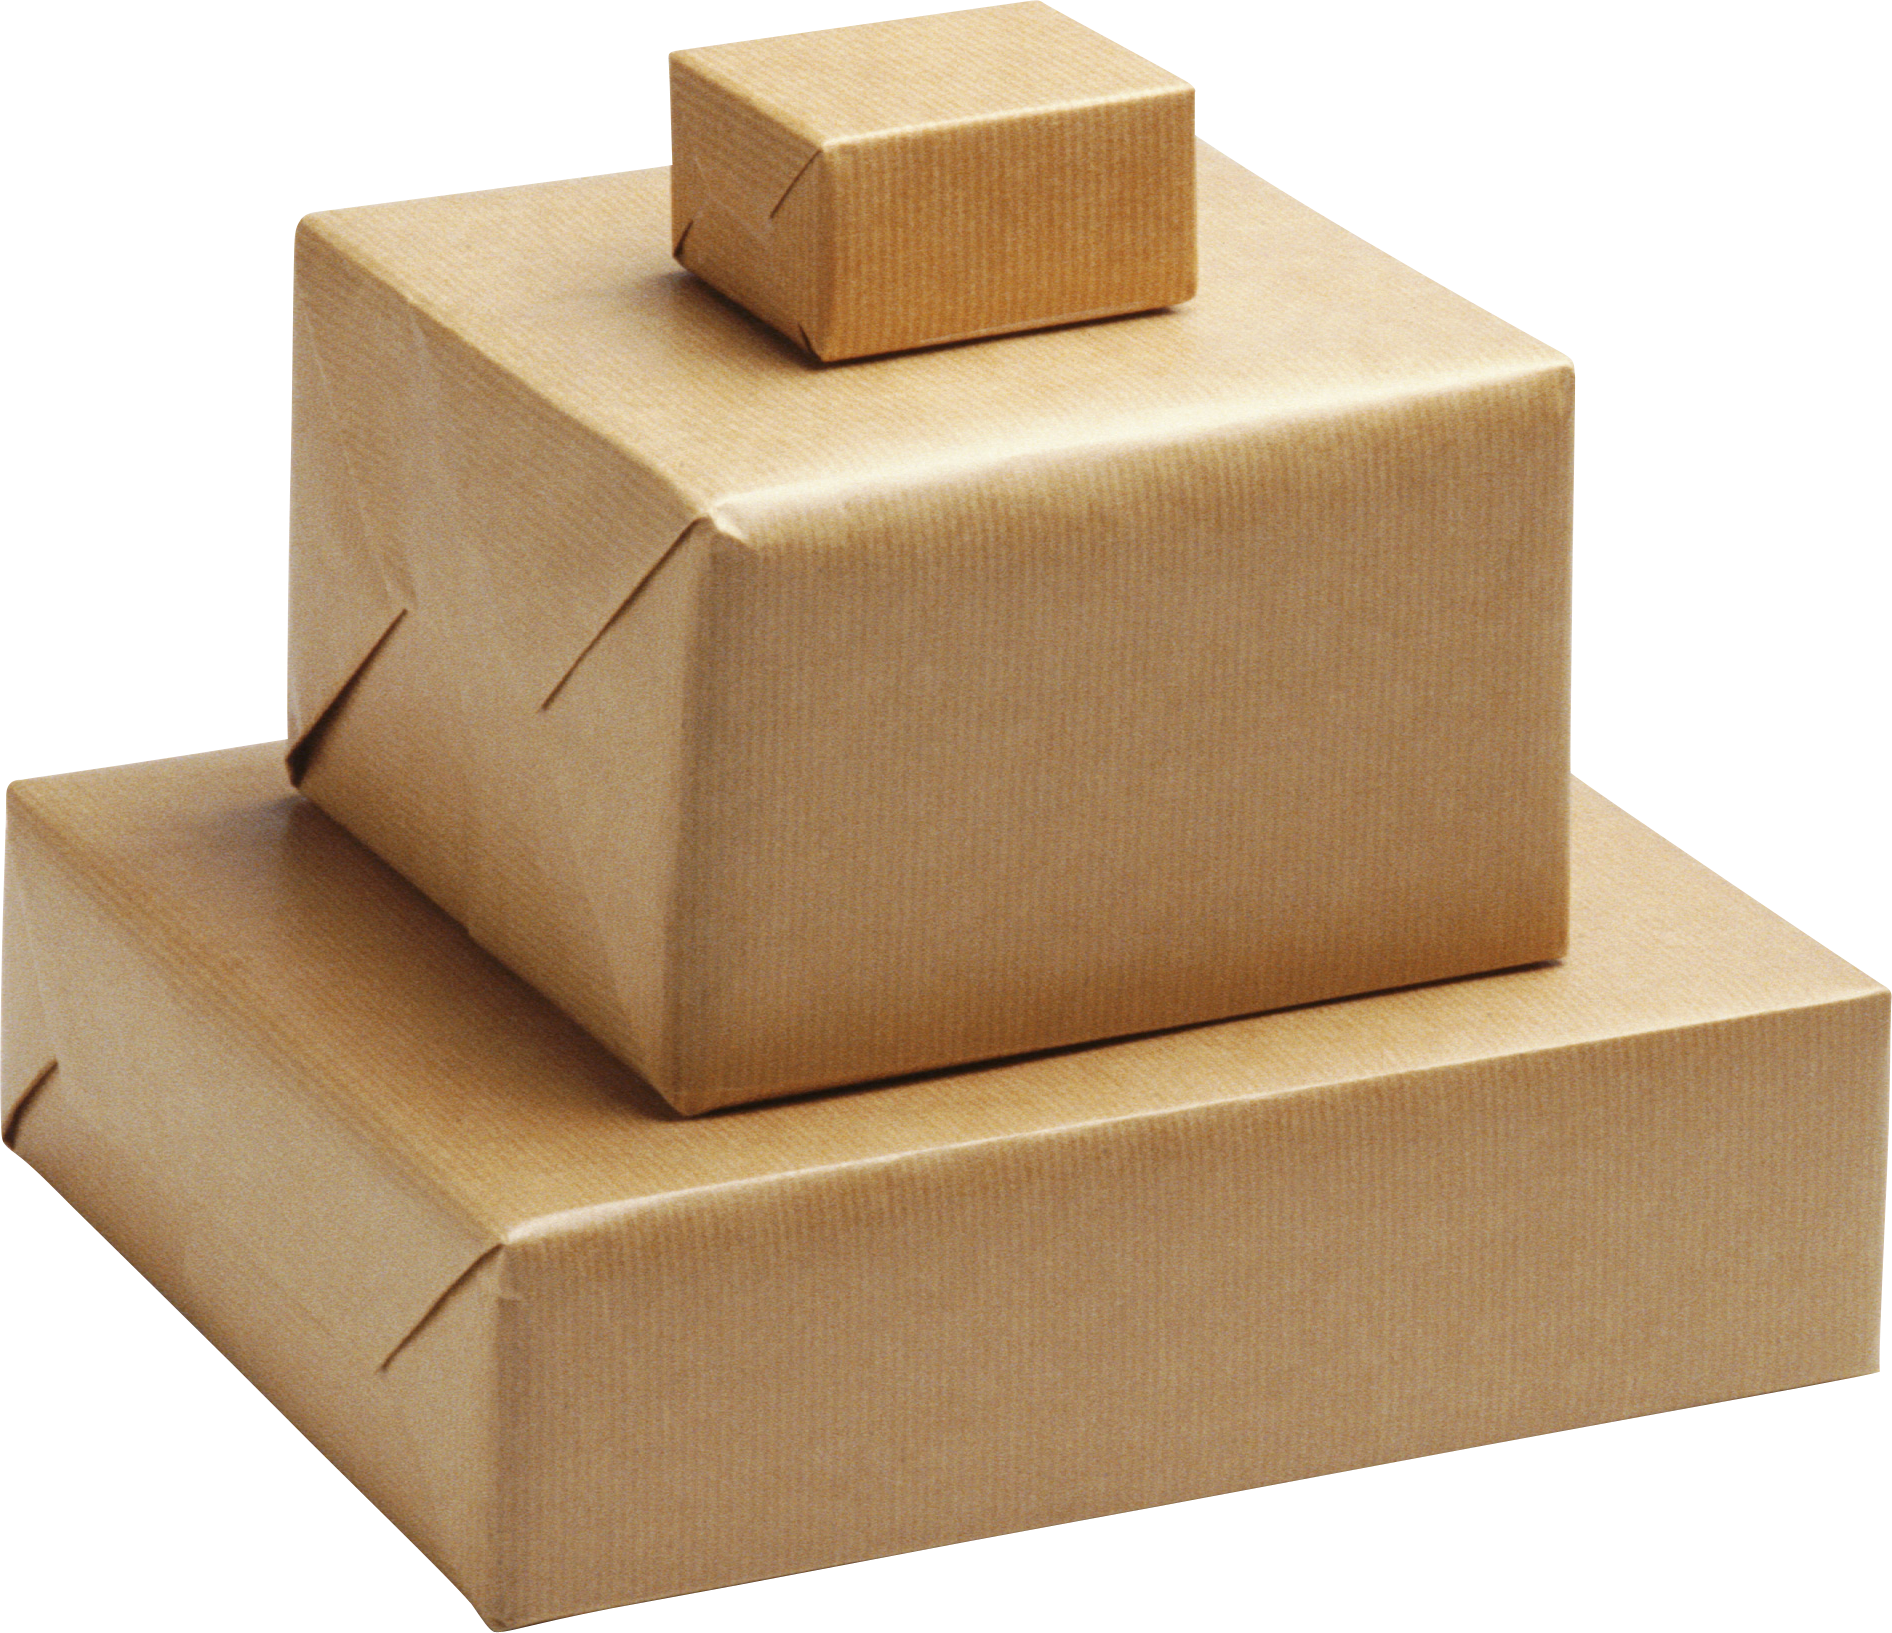 Box. Коробка. Картонных подарочных коробок на прозрачном фоне. Крафтовая коробка без фона. Коробка упаковочная клипарт.